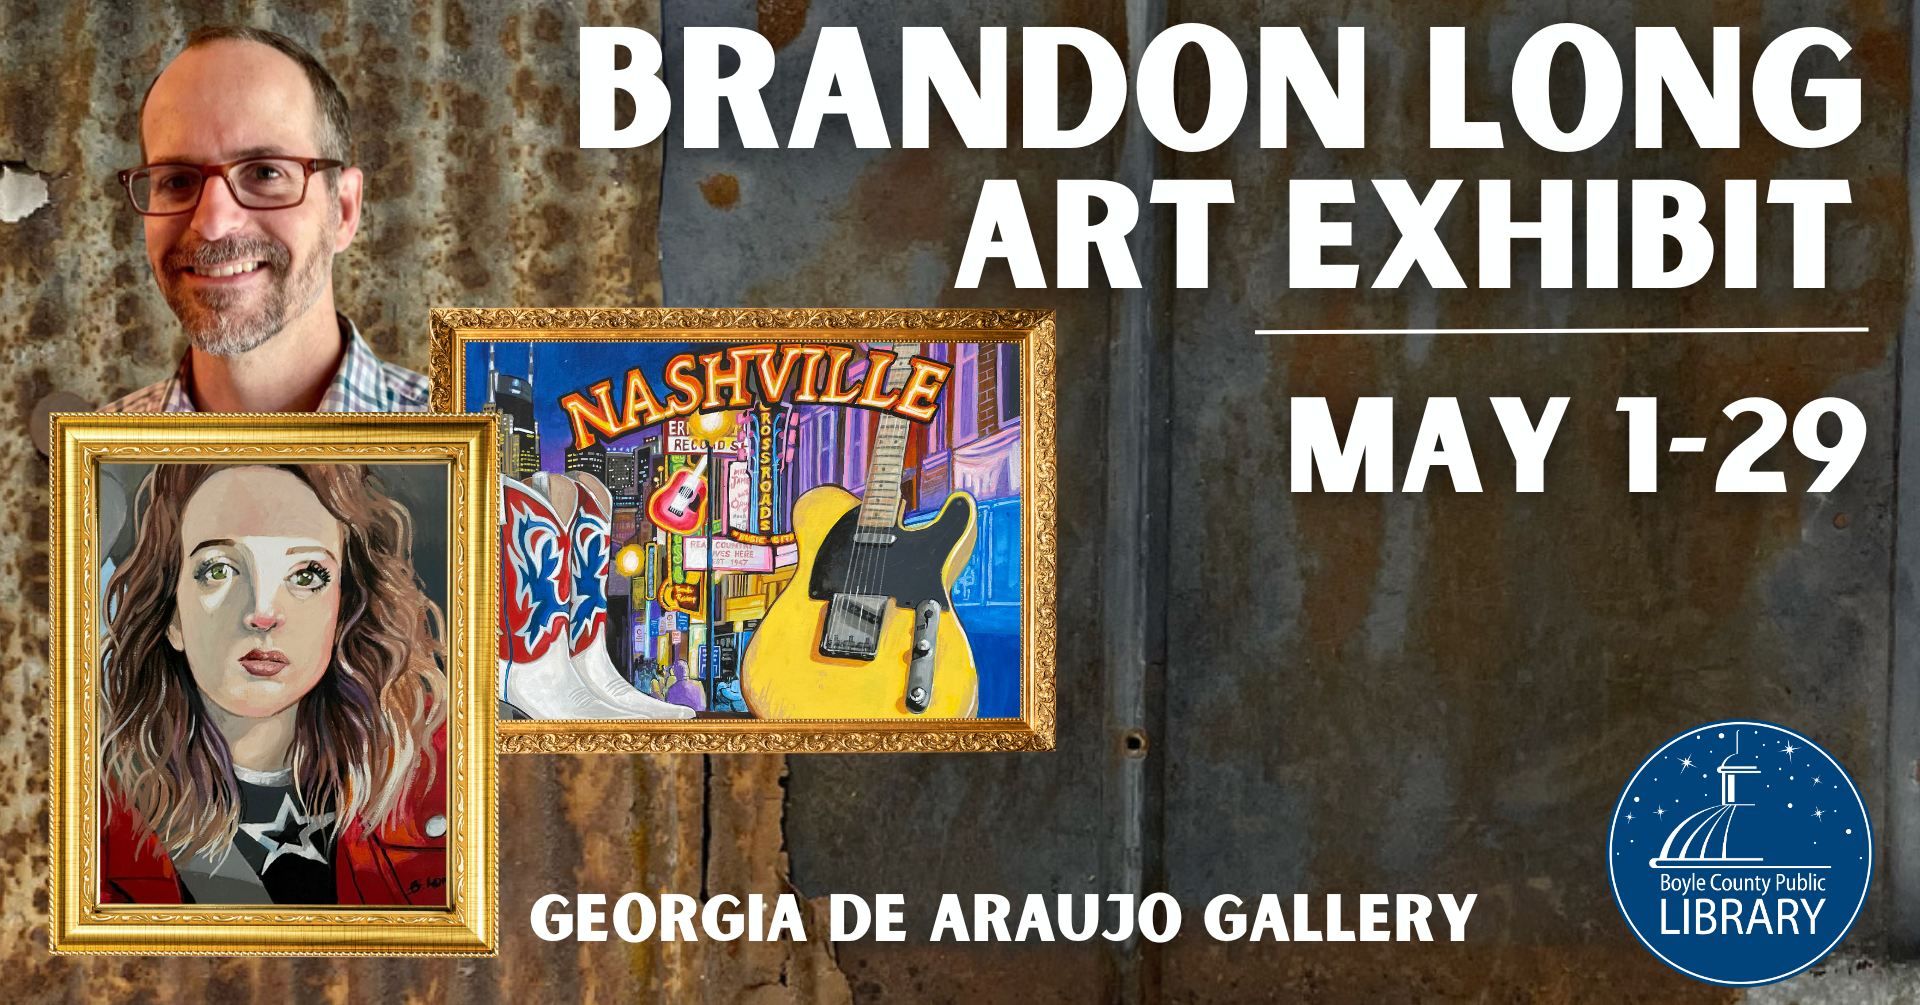 Brandon Long Art Exhibit